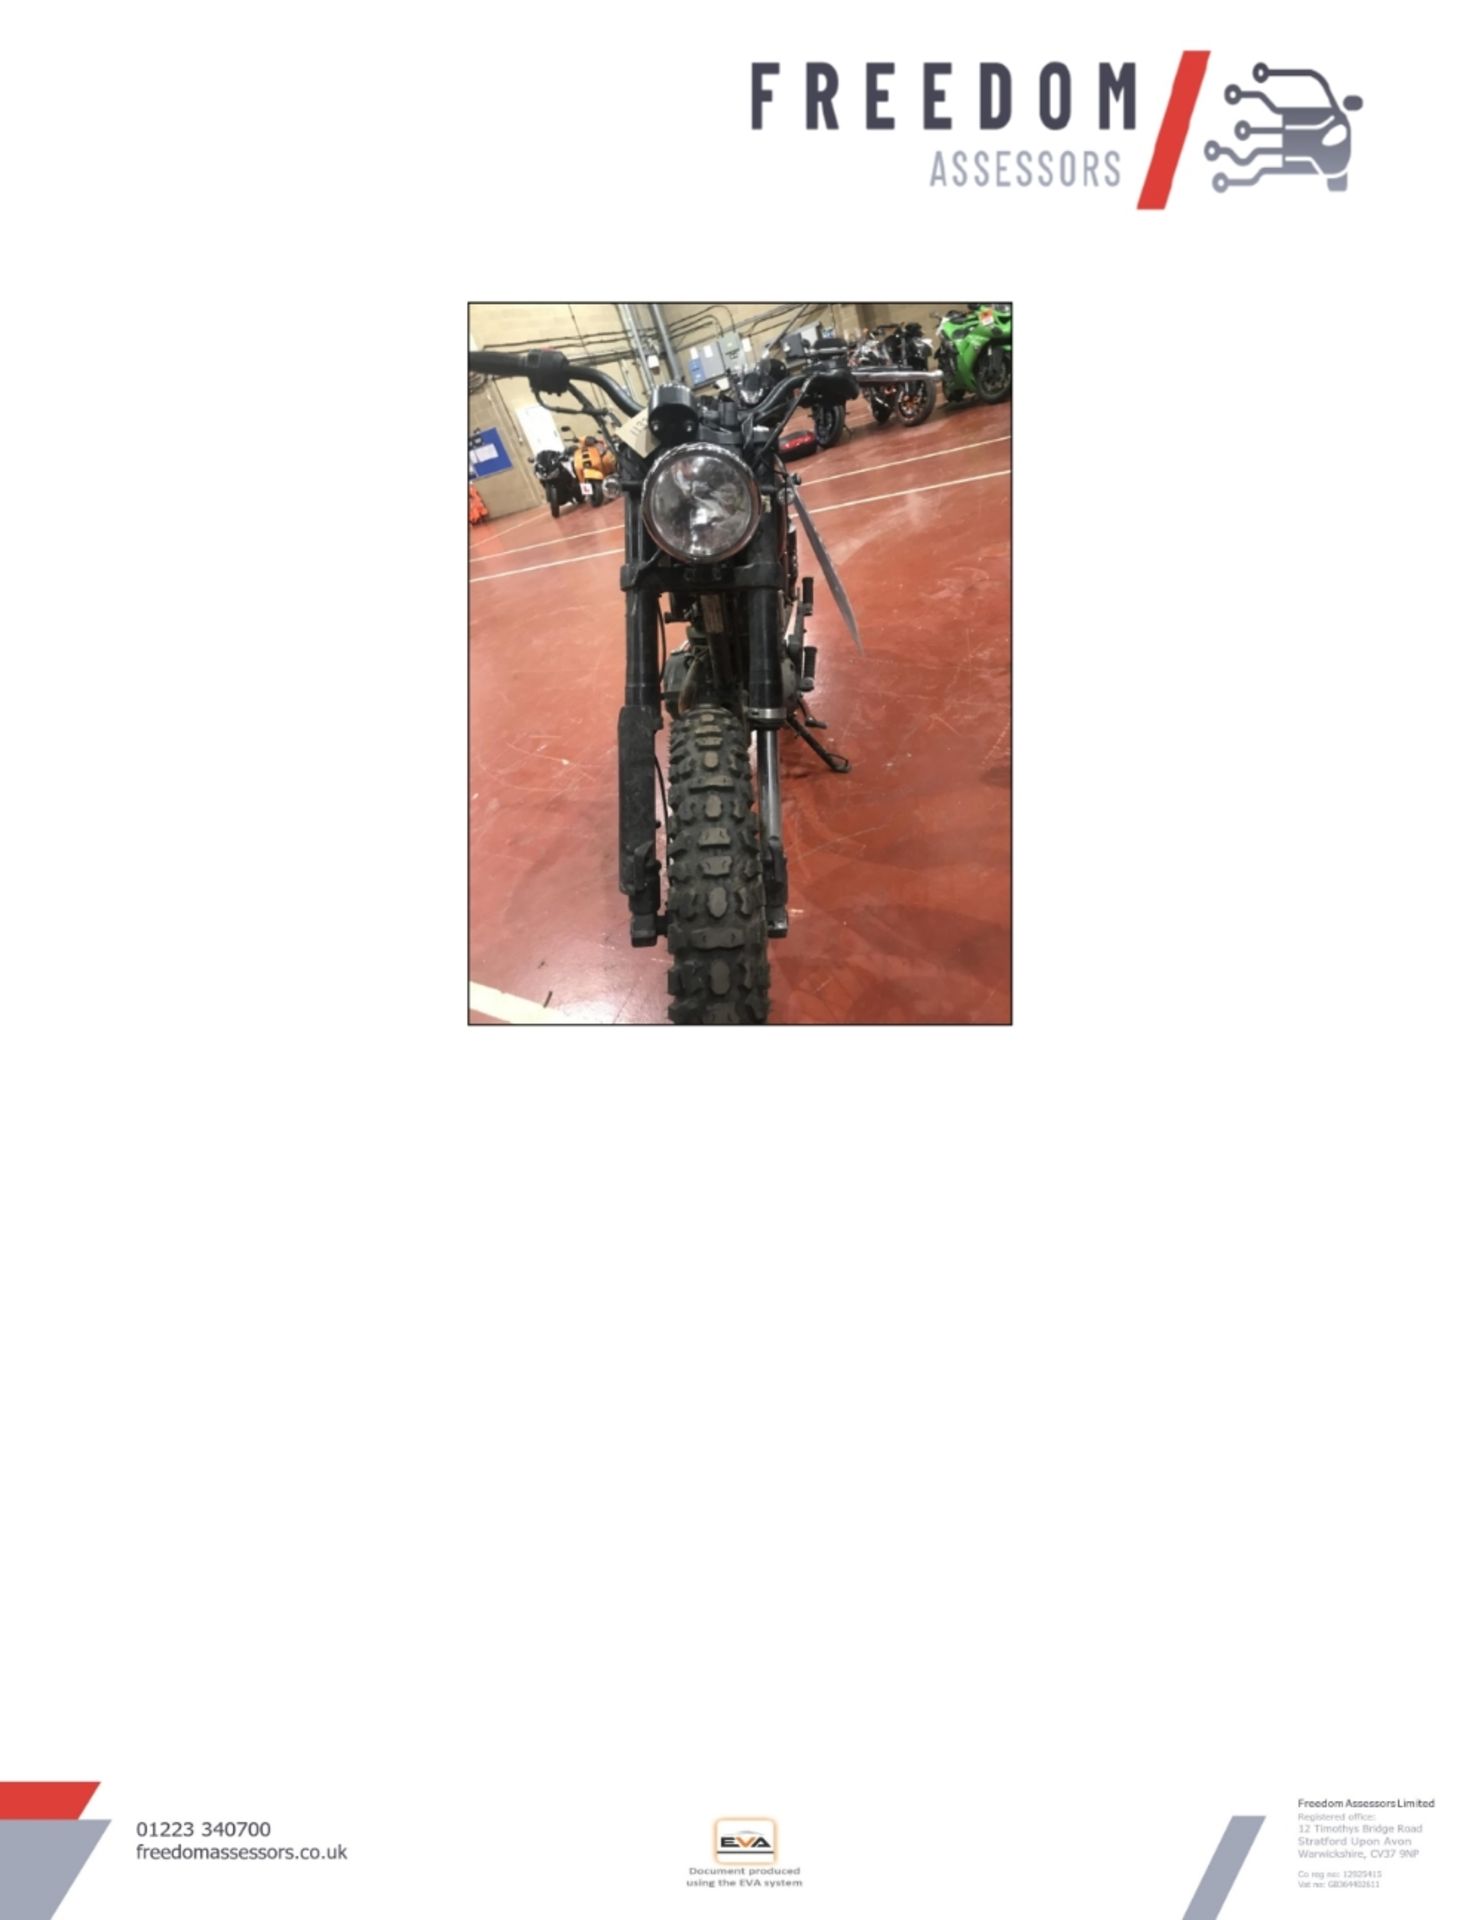 LB20 NBX Hanway HS 125 Scrambler E4 Motorcycle - Image 24 of 32